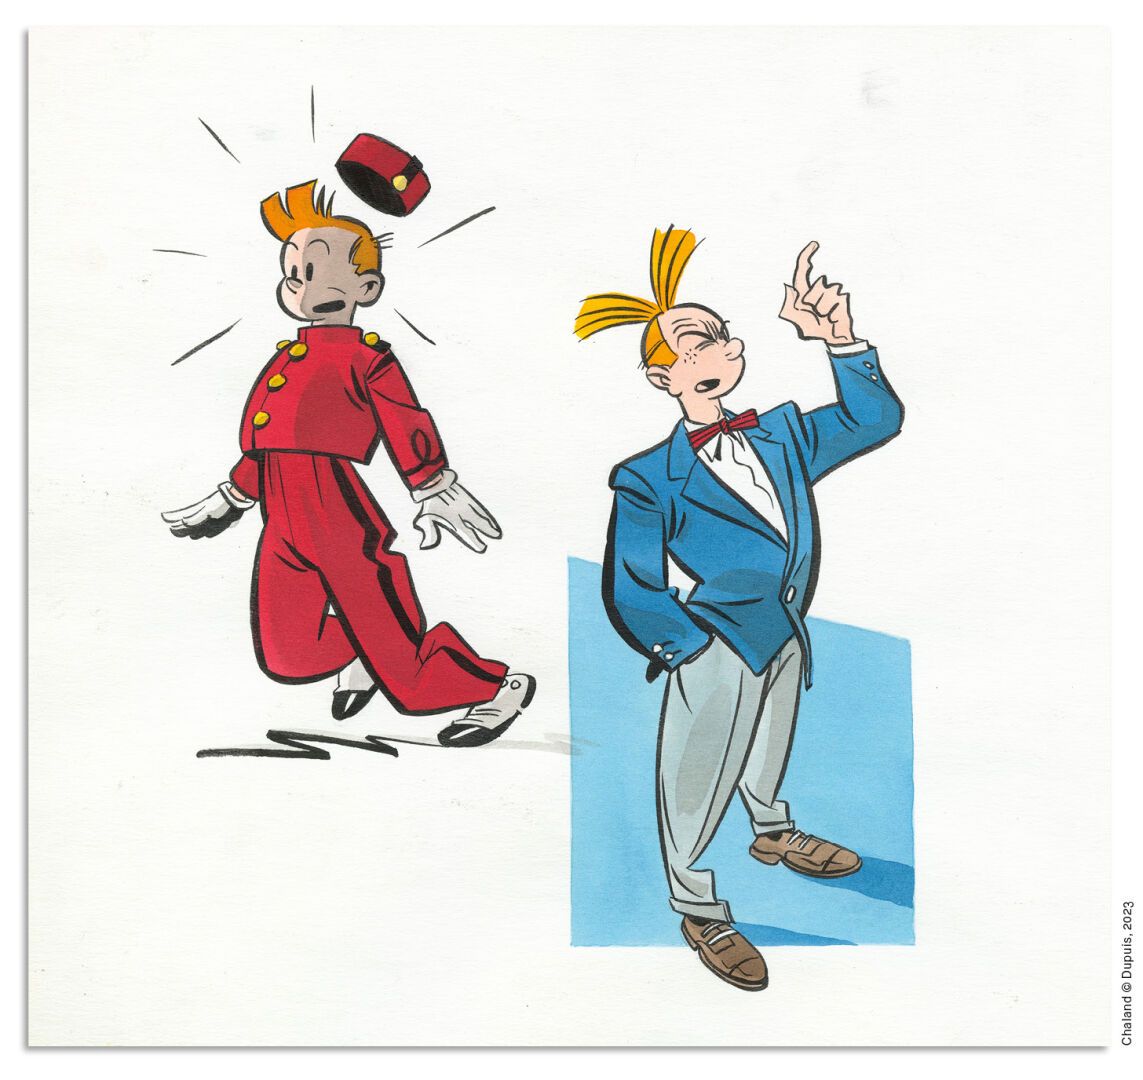 CHALAND YVES CHALAND
SPIROU
Dupuis
Ilustración original realizada en 1982, porta&hellip;